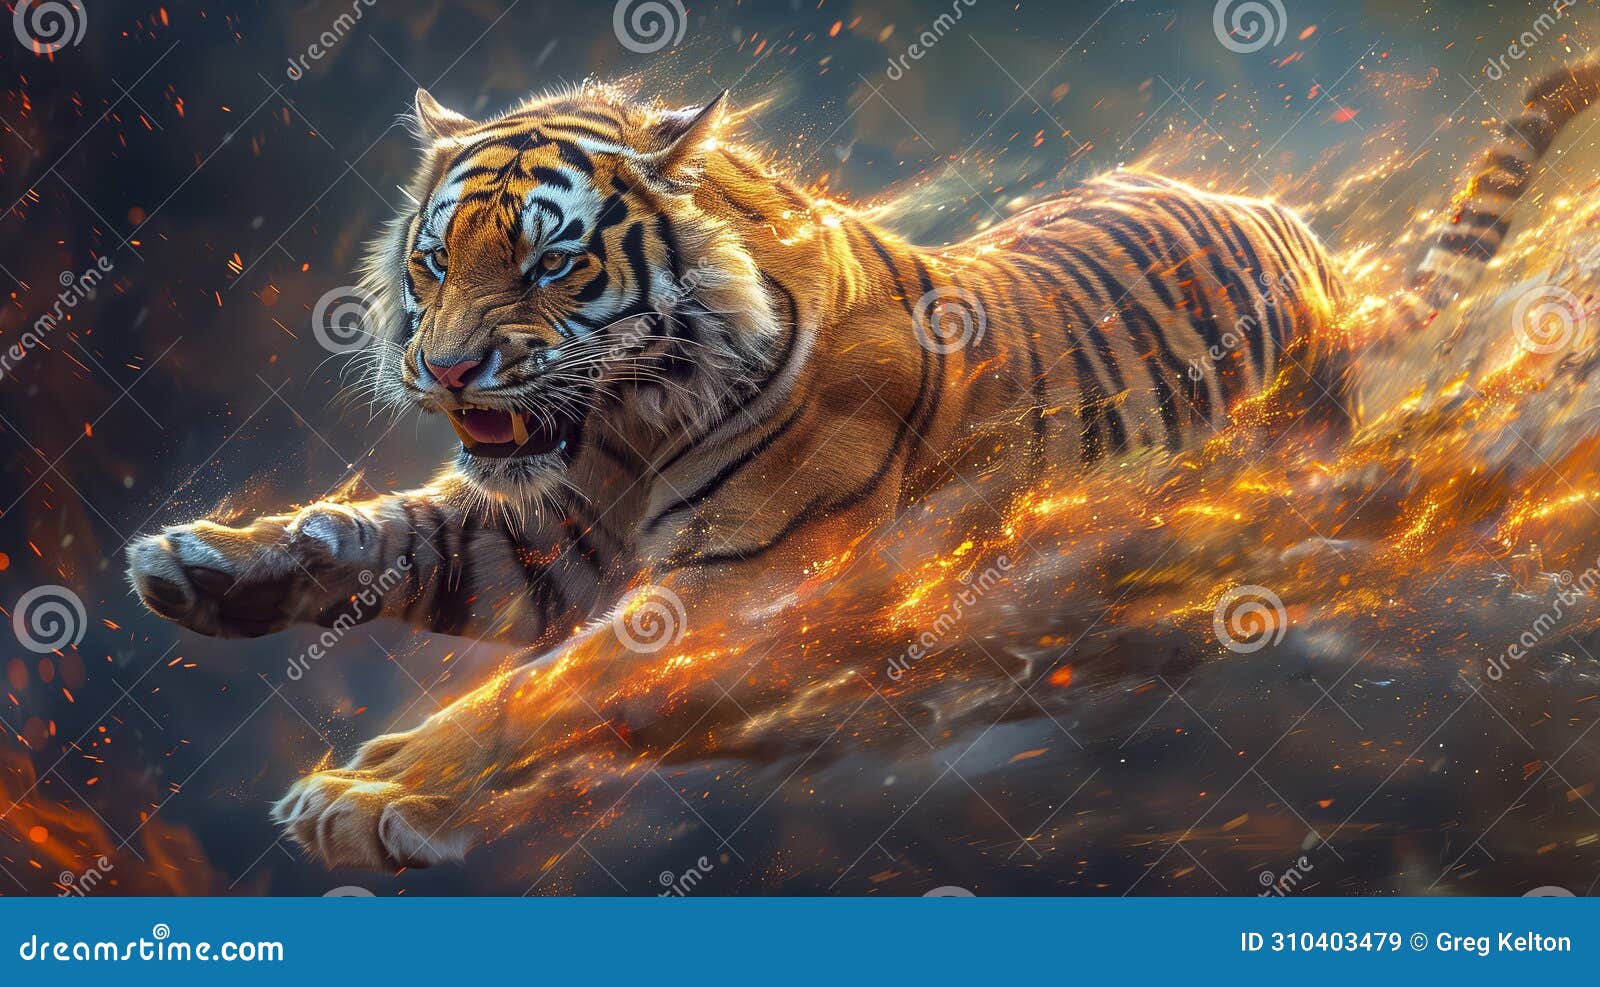 fierce tiger pouncing forward enveloped in flames, exemplifying predatory power and fiery ferocity